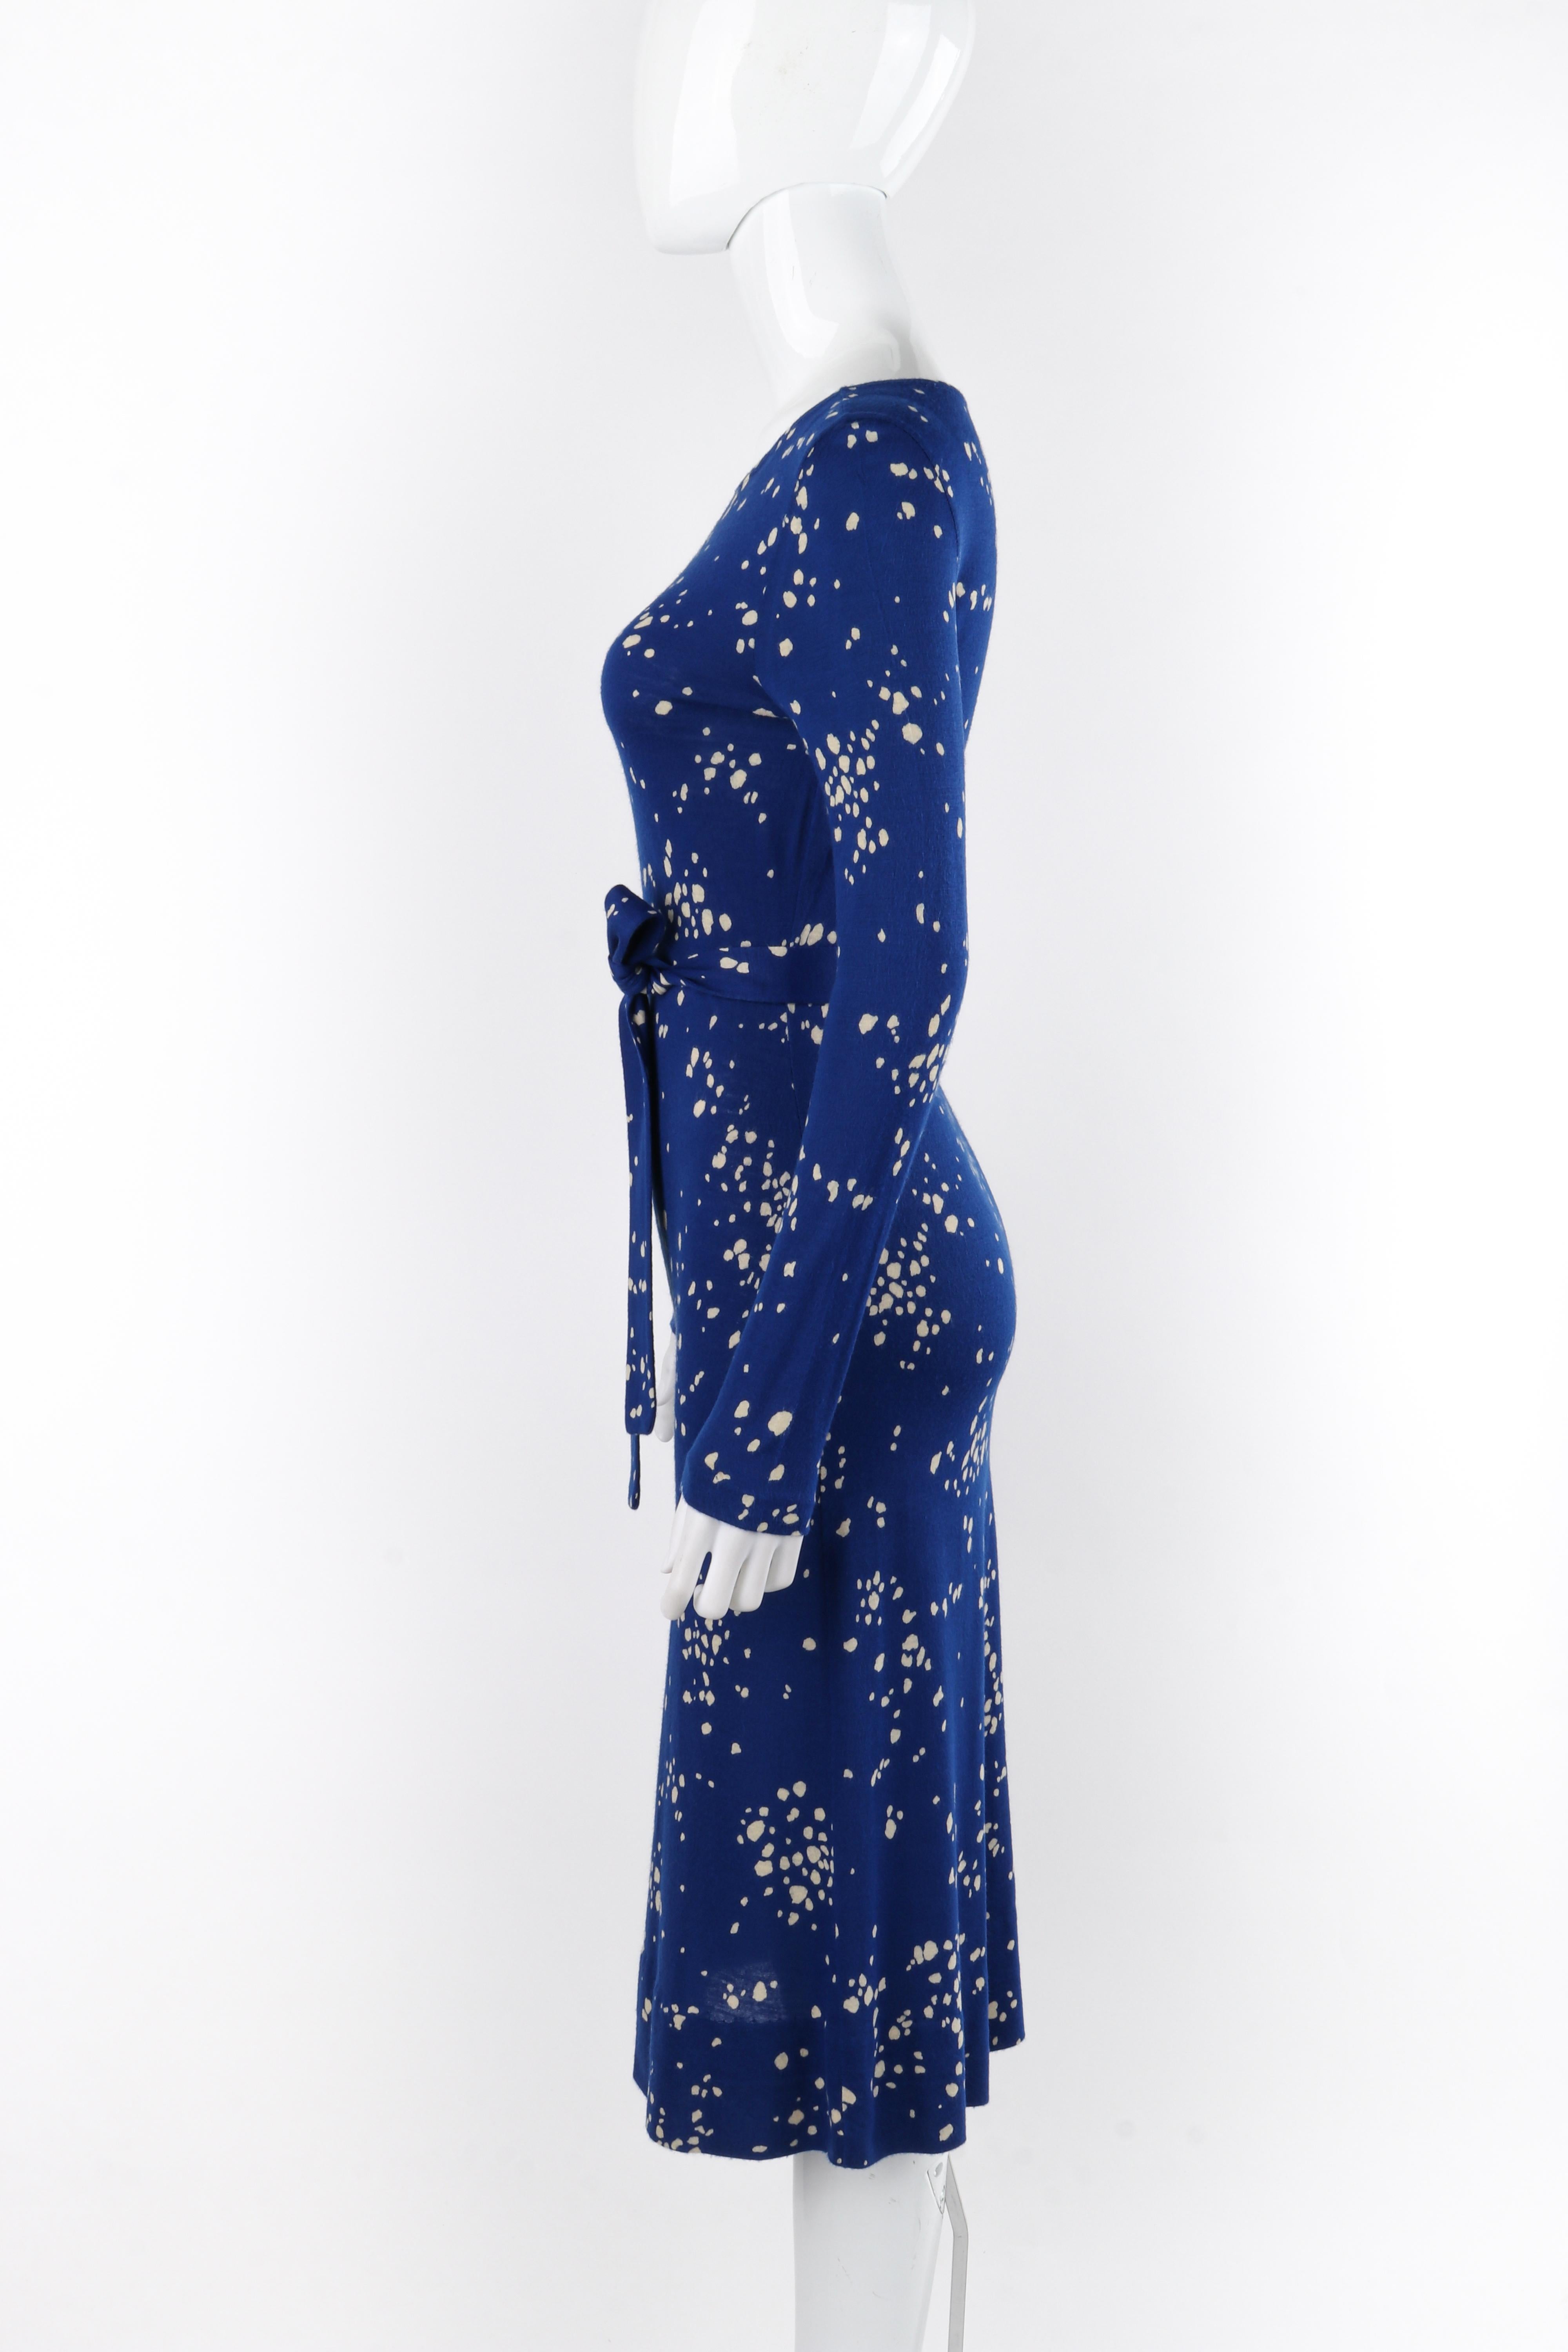 DIANE Von FURSTENBERG c.1970's Blue White Speckled Belted Long Sleeve Dress 2